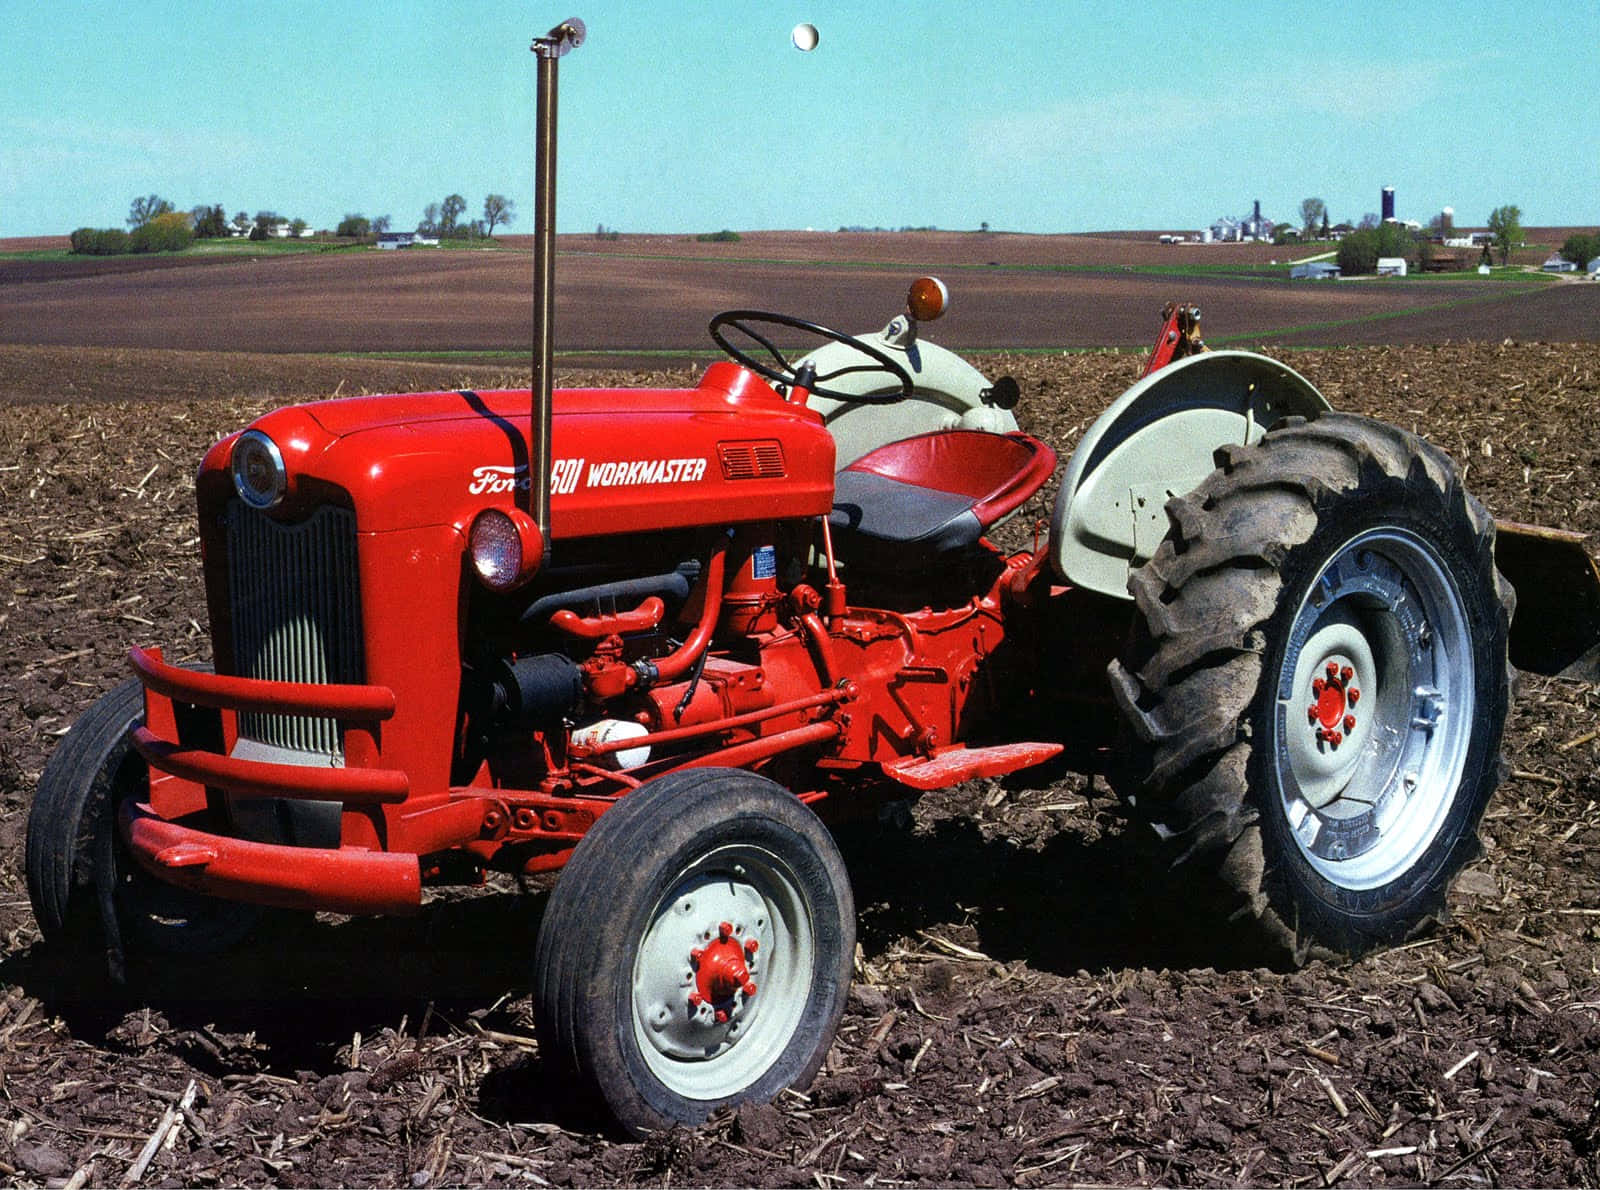 Imagende Un Tractor Ford Rojo.